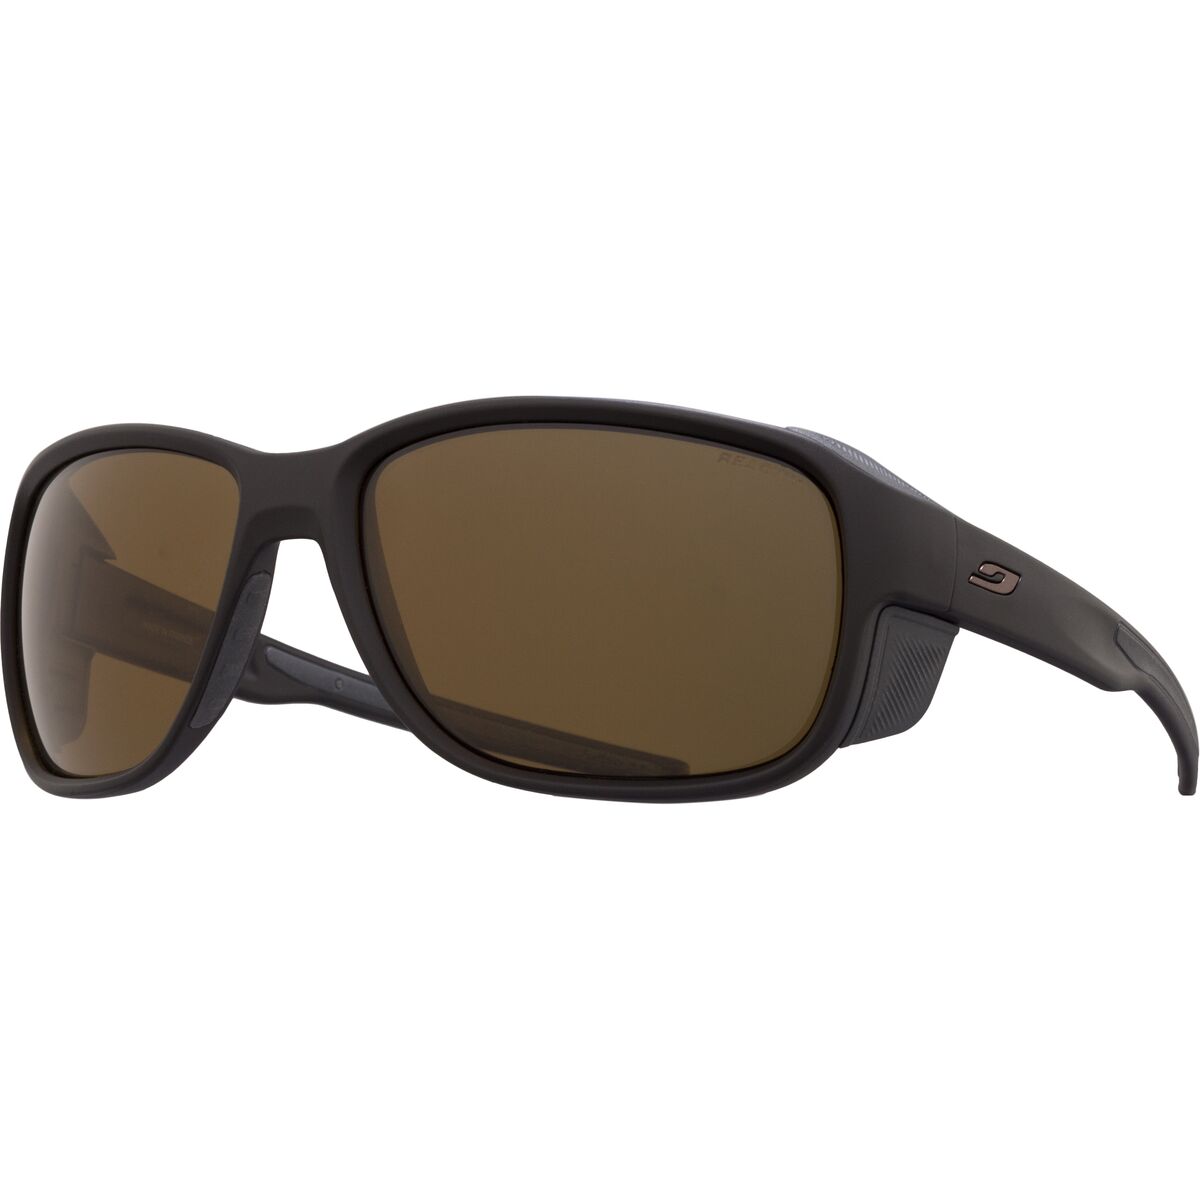 Julbo Montebianco 2 Polarized Sunglasses - Men's